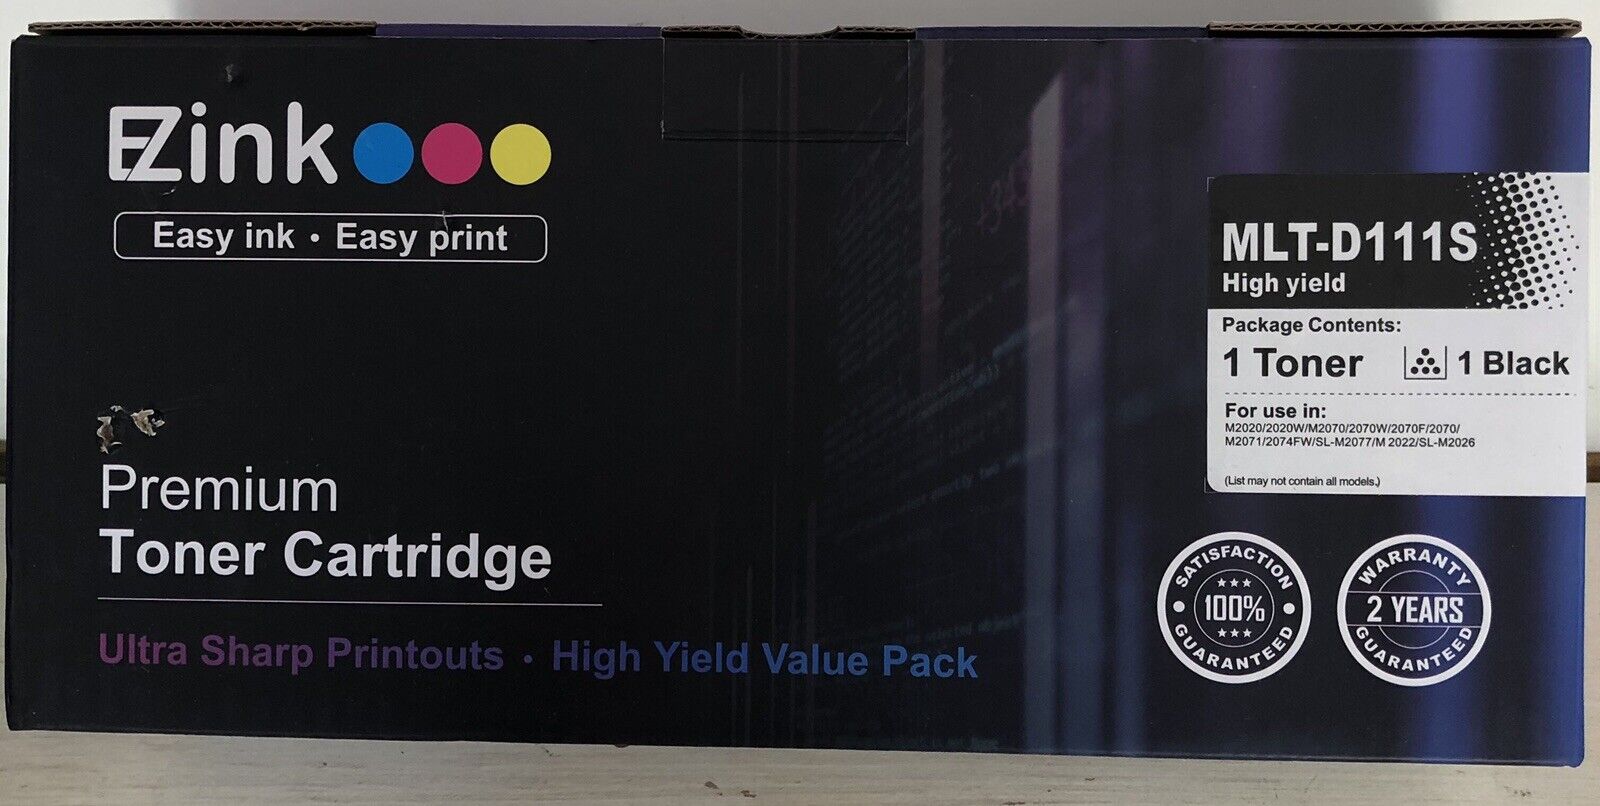 EZink Easy Ink Premium Toner Cartridge High Yield  MLT-D111S NIB